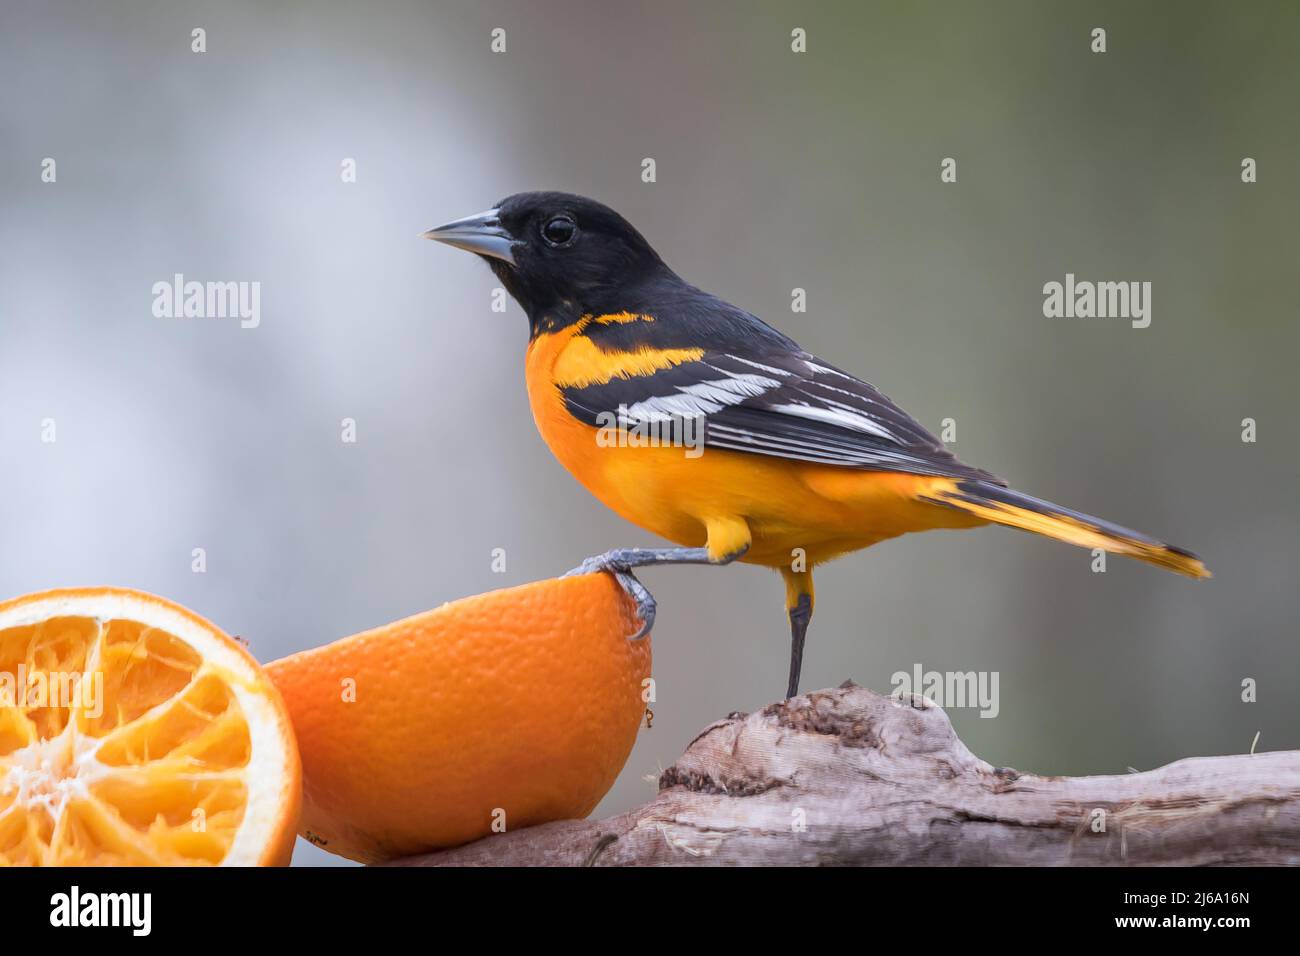 Male Baltimore Oriole feeding on oranges at feeder Stock Photo